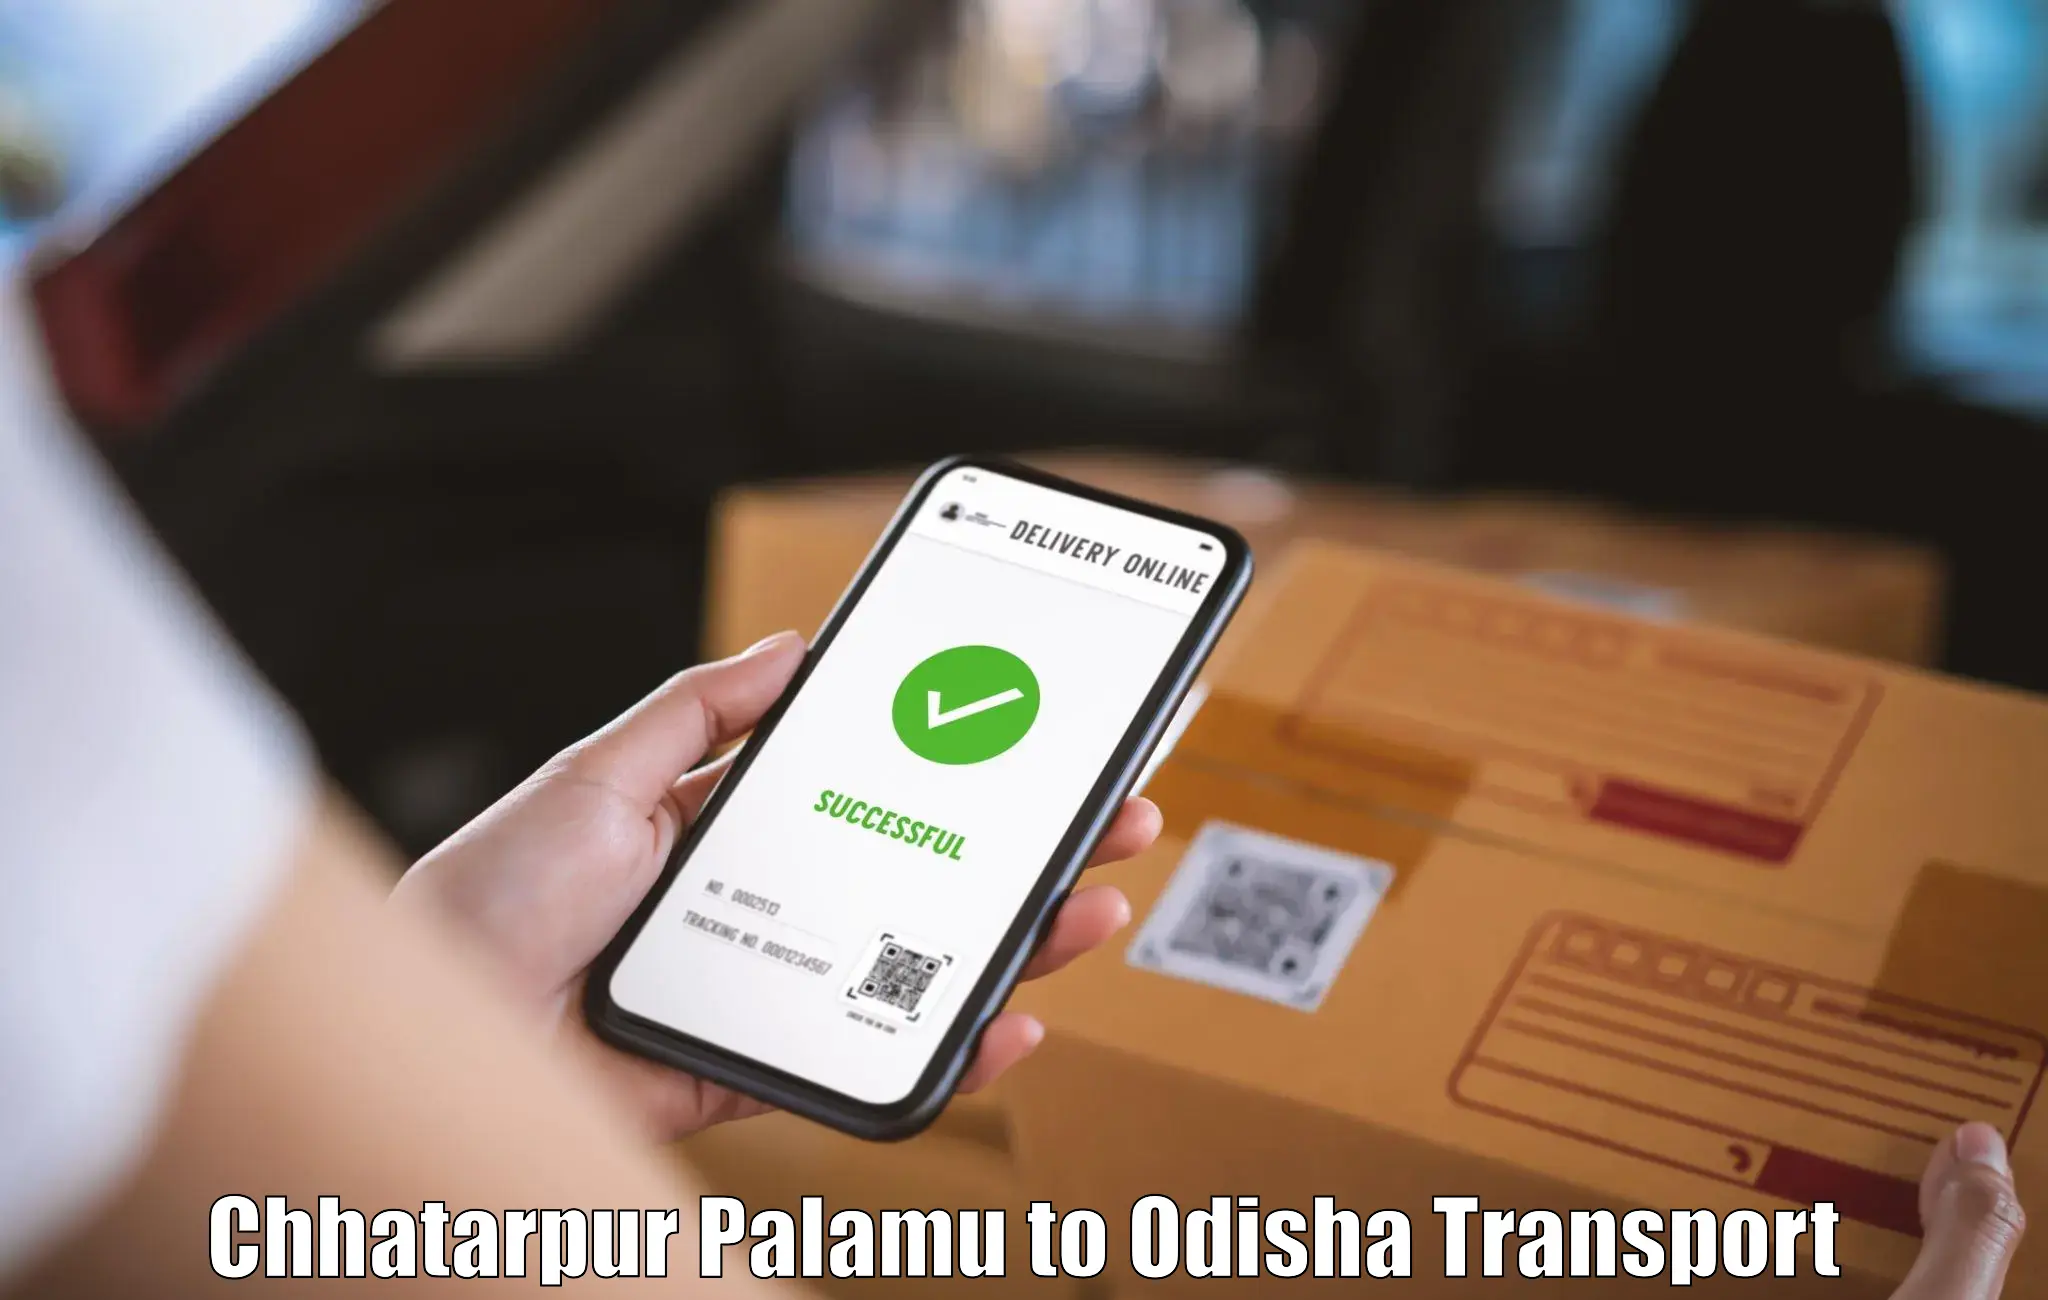 Transport in sharing Chhatarpur Palamu to Jajpur